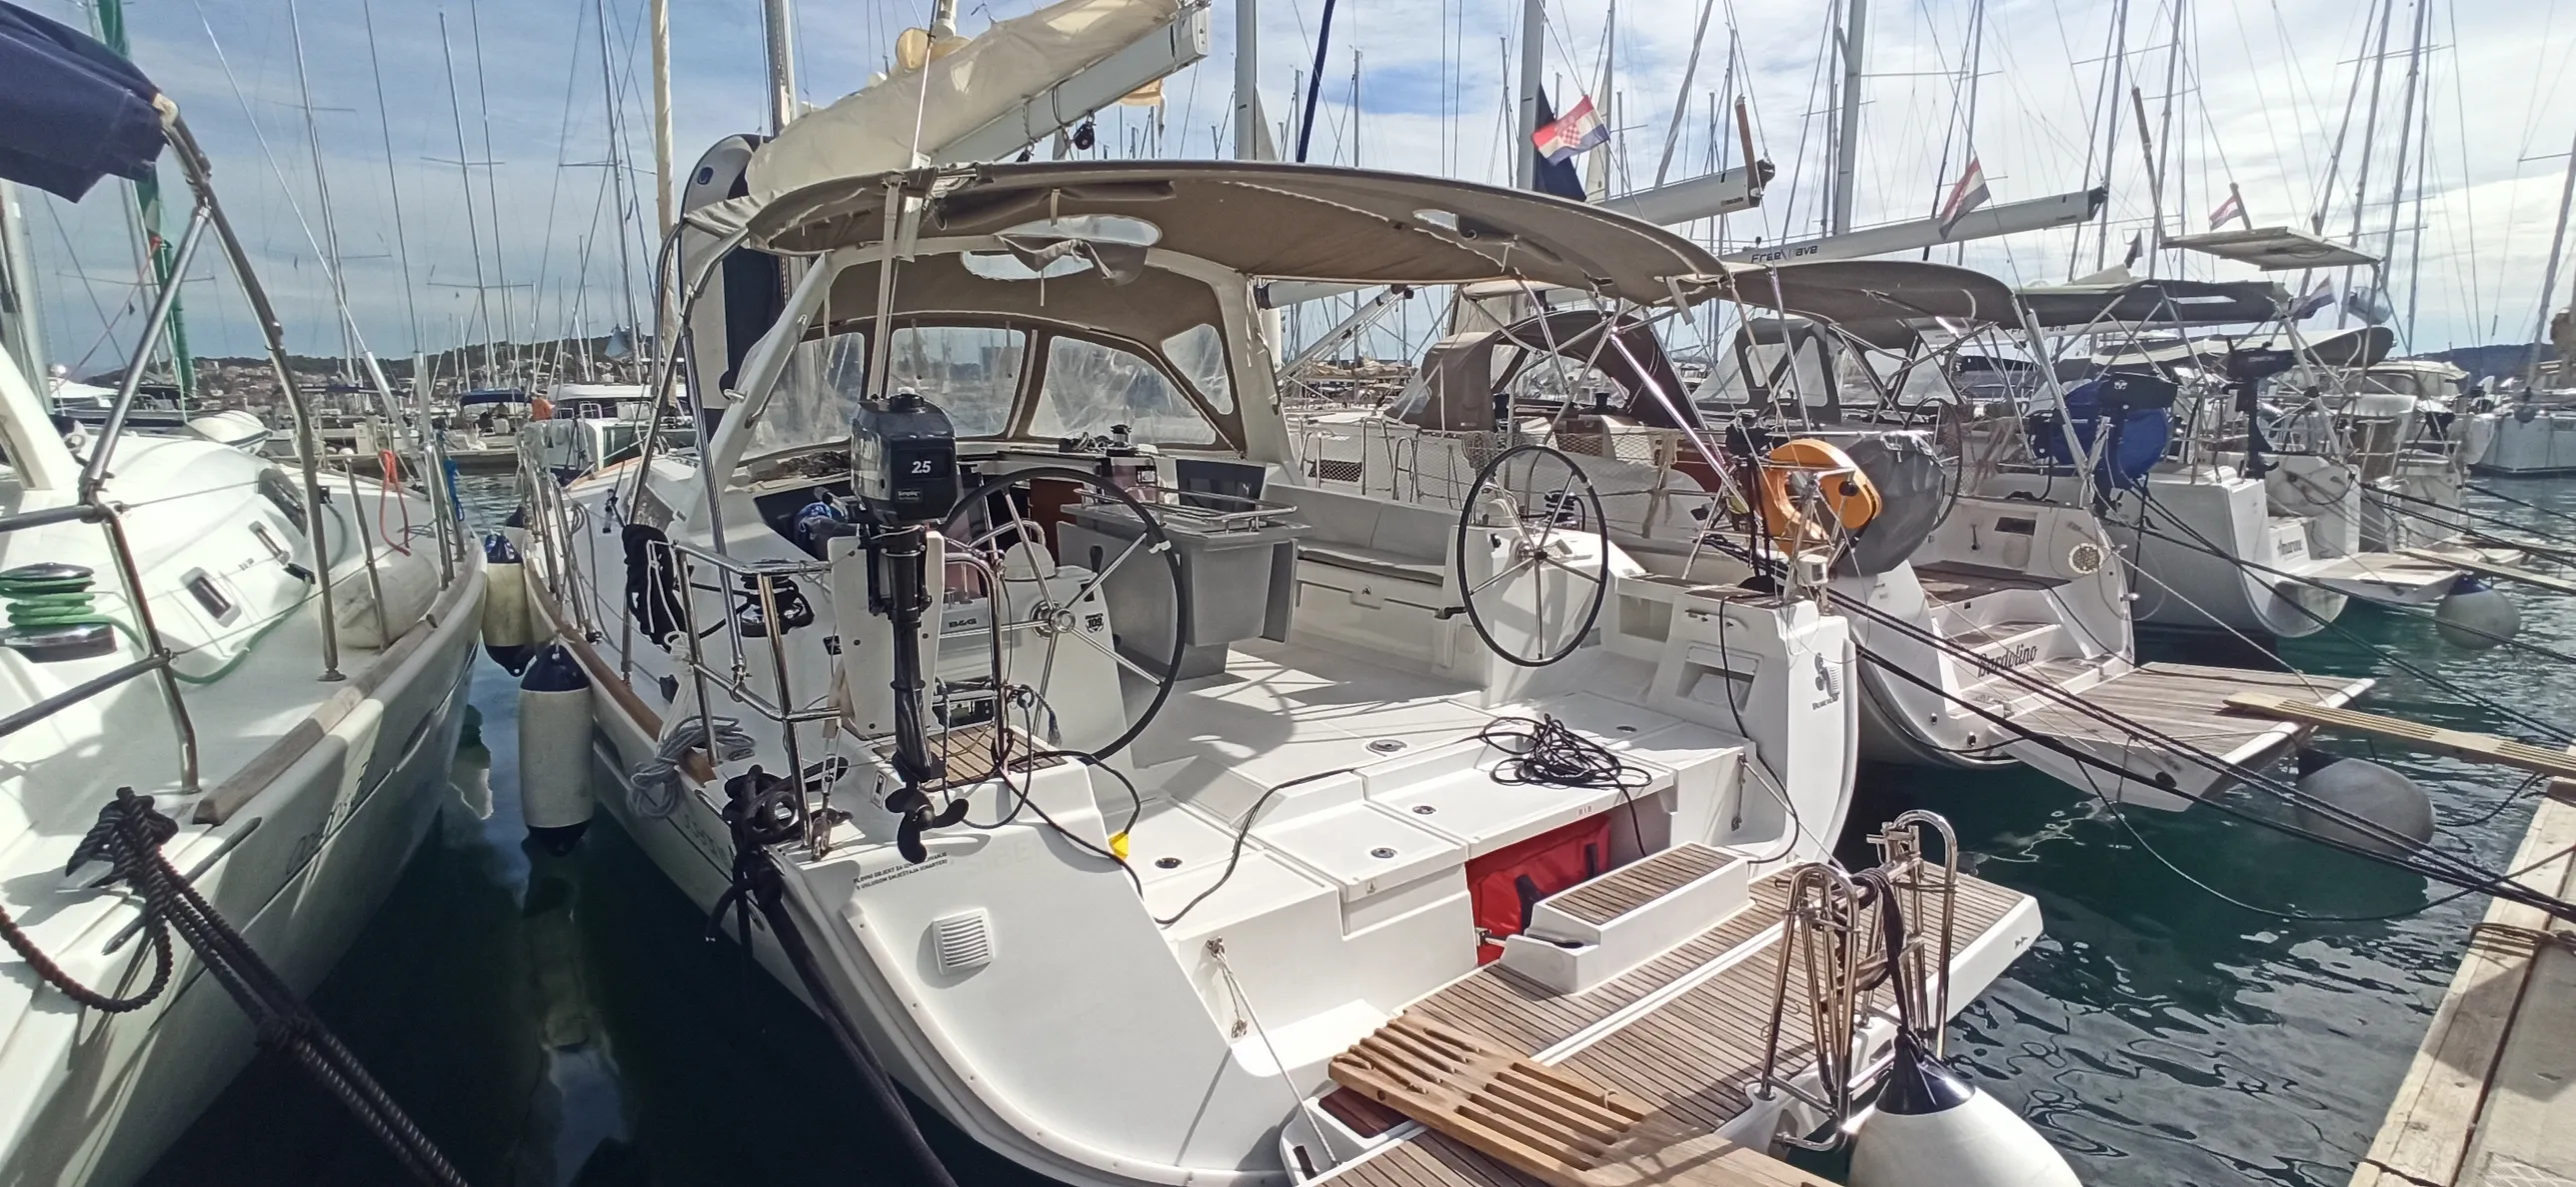 Yachtcharter Beneteau Oceanis 45 ‘Pomerol’